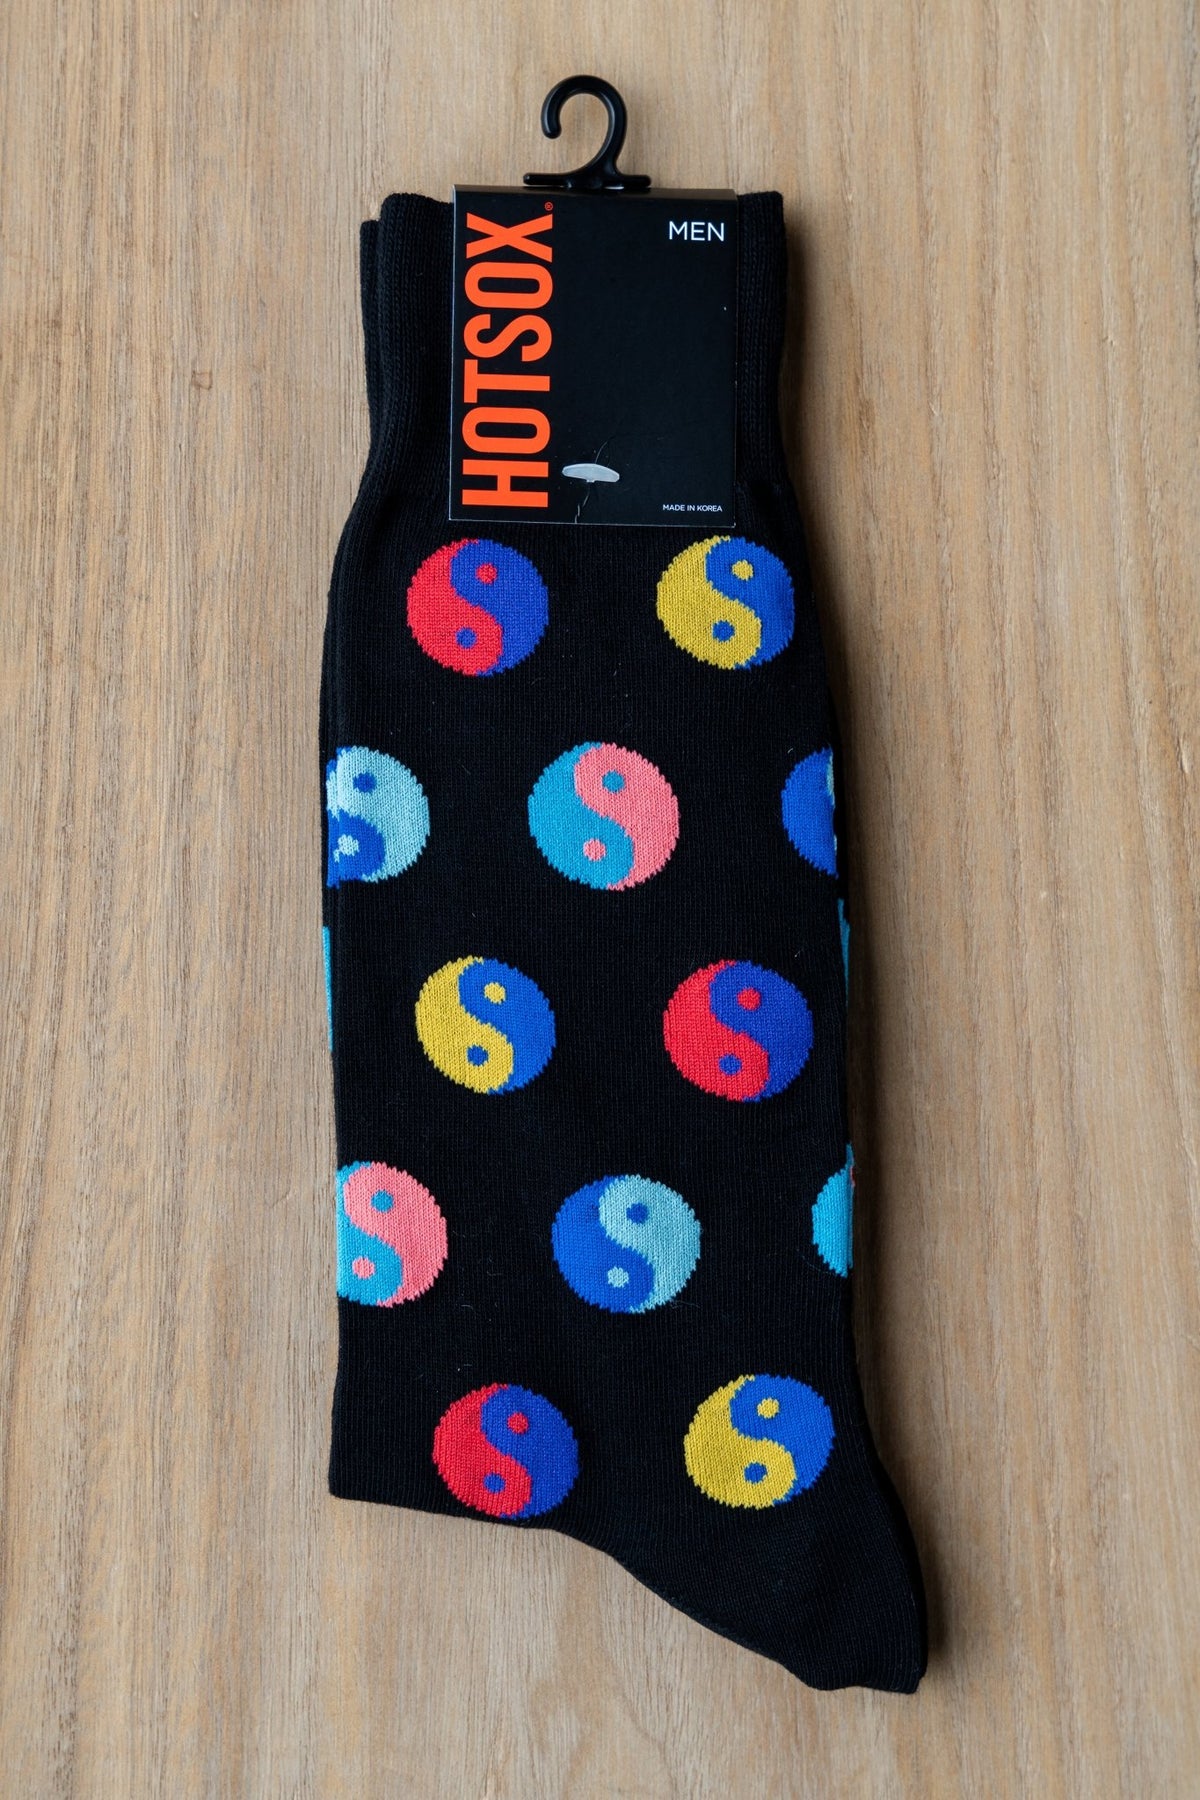 HotSox yin yang multi socks black - Trendy Socks at Lush Fashion Lounge Boutique in Oklahoma City